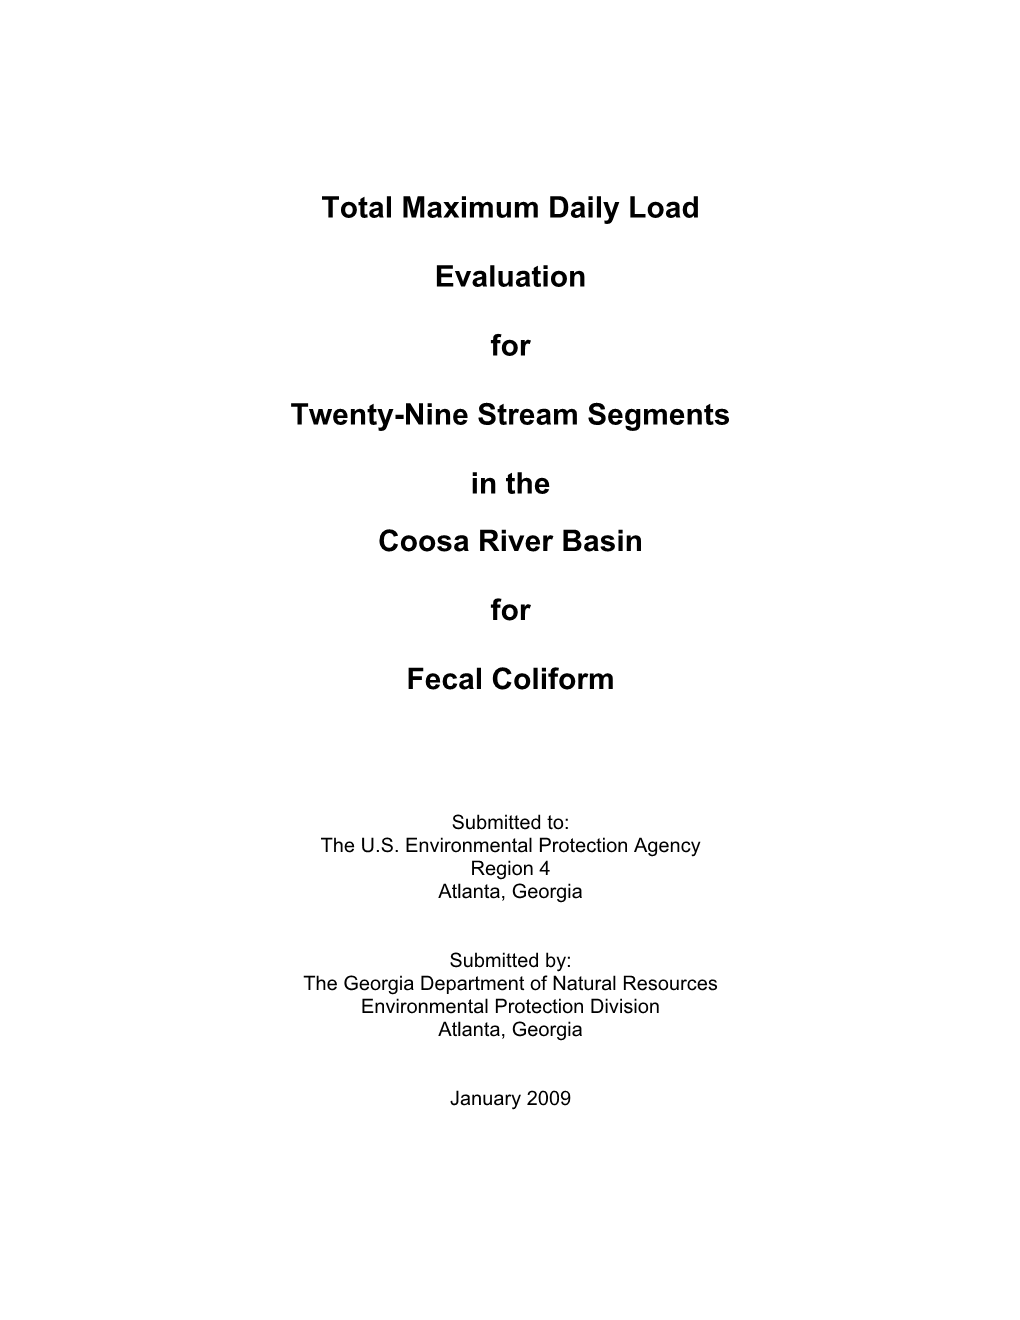 Total Maximum Daily Load Evaluation for Twenty-Nine Stream Segments